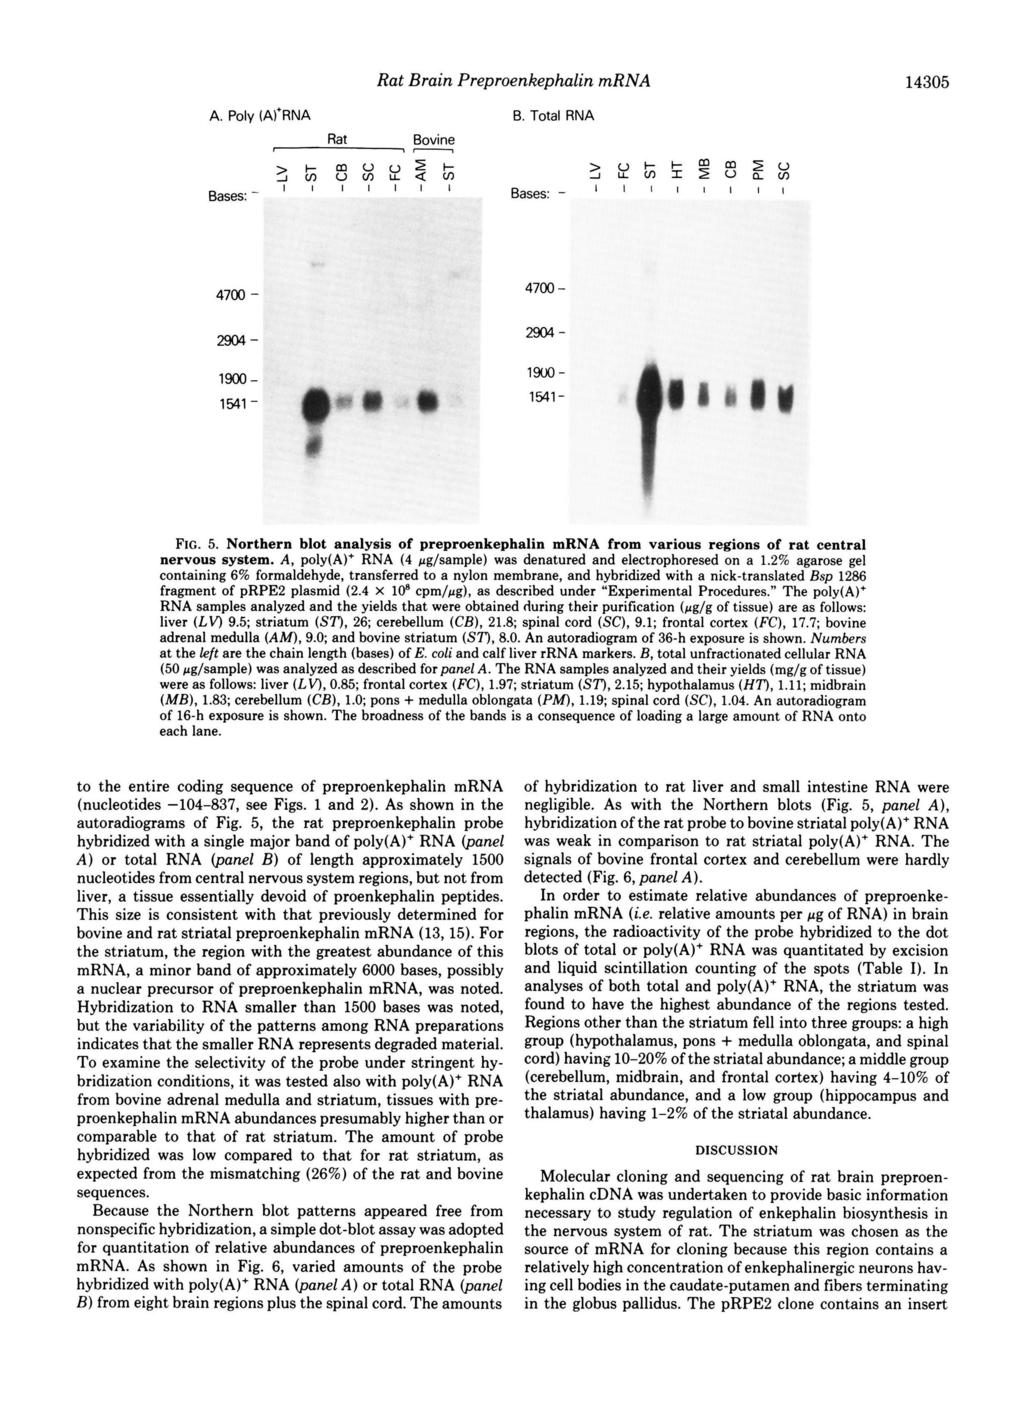 Rat Brain Preproenkephulin mrna B. Total RNA A. Poly (ATRNA Bovine 47-294- 1435 Rat 47-294- 19-19- 1541-1541 - FG.5. Northern blot analysis of preproenkephalin mrna from various regions of rat central nervous system.